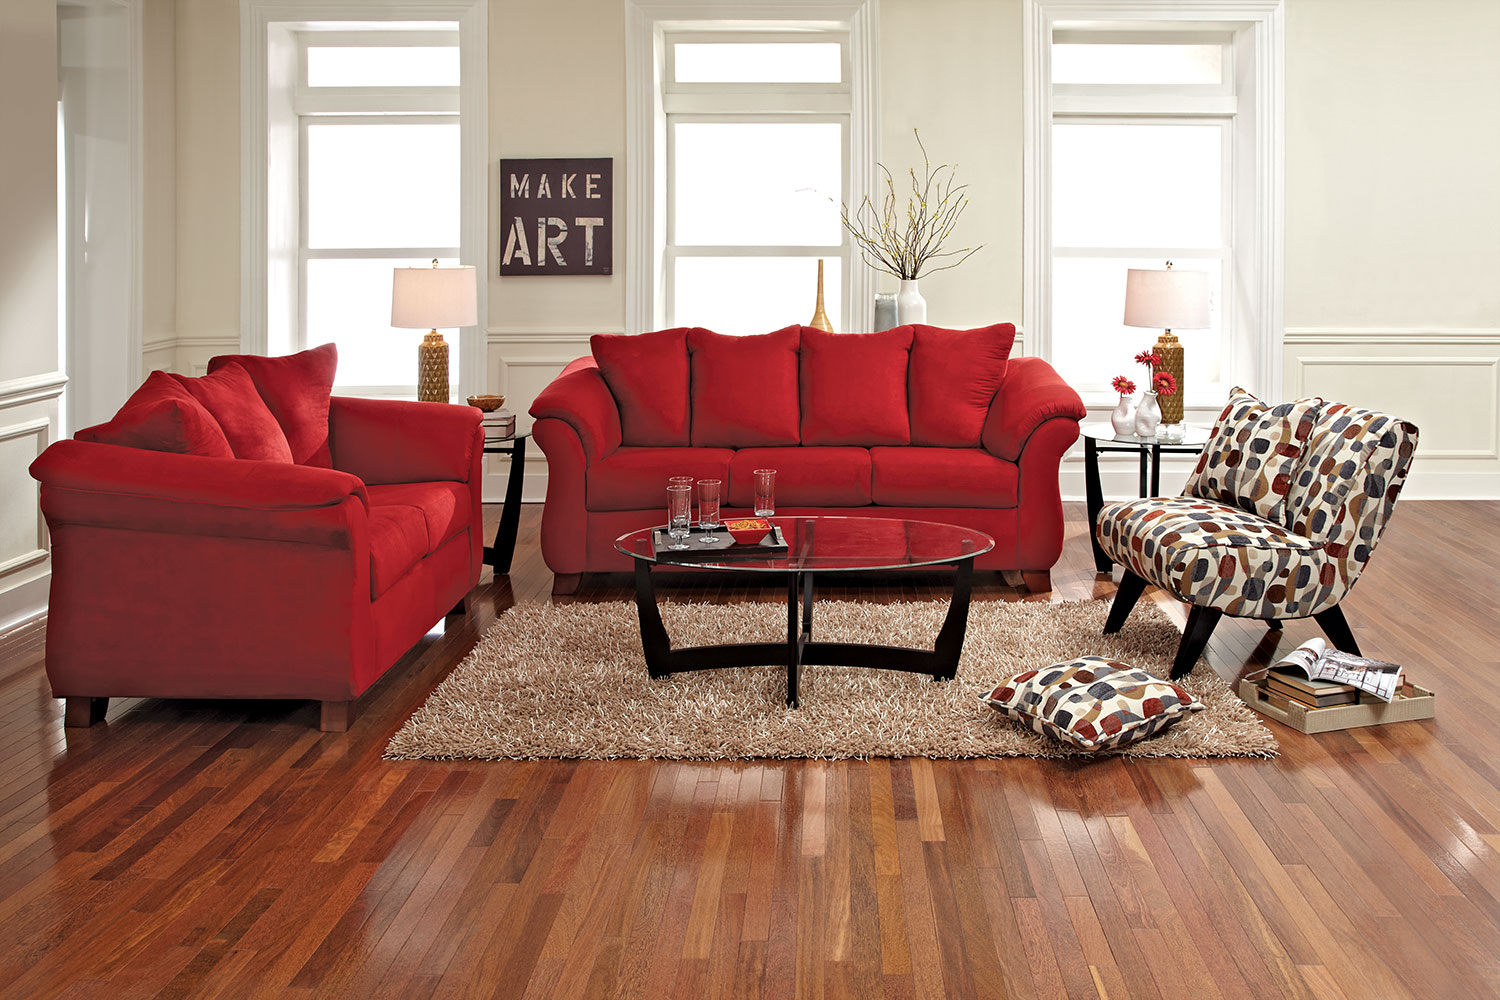 Value City Living Room Furniture On Sale | semashow.com